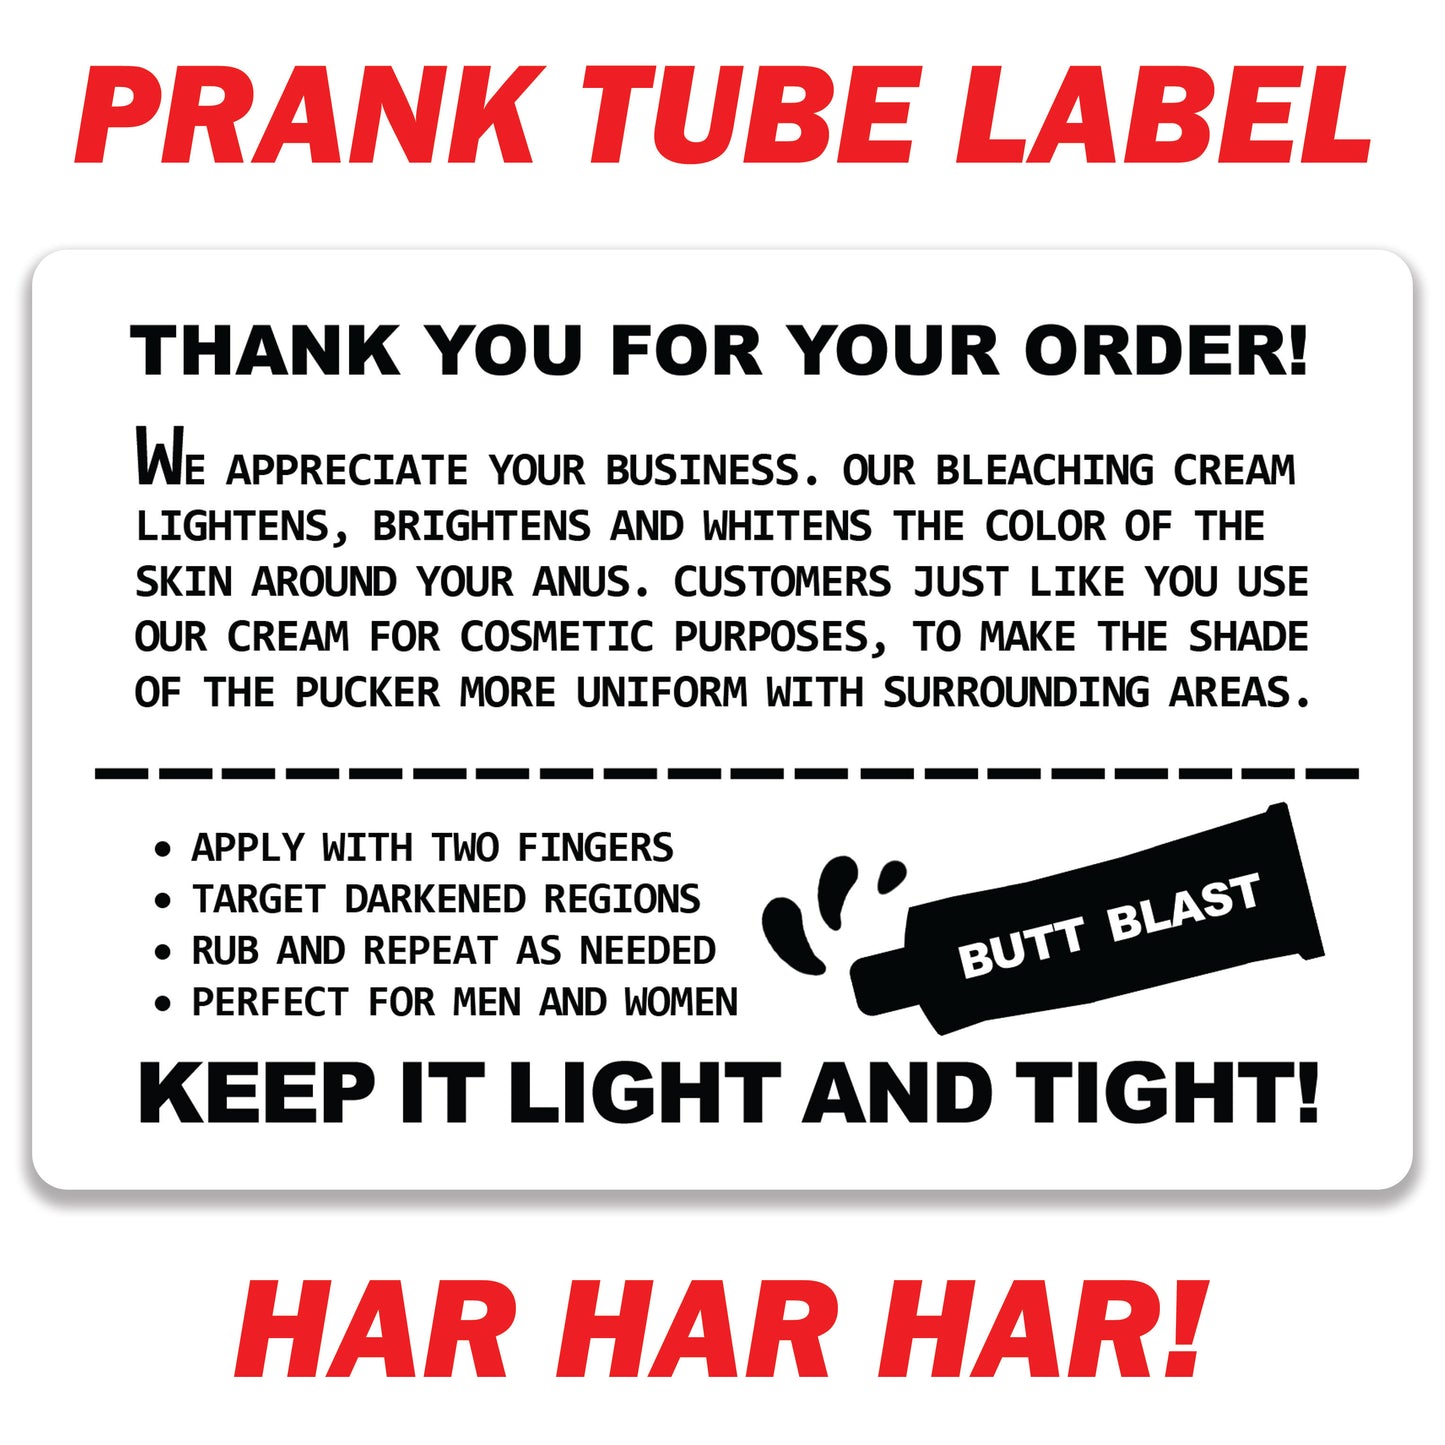 Gag Label for Prank Tube